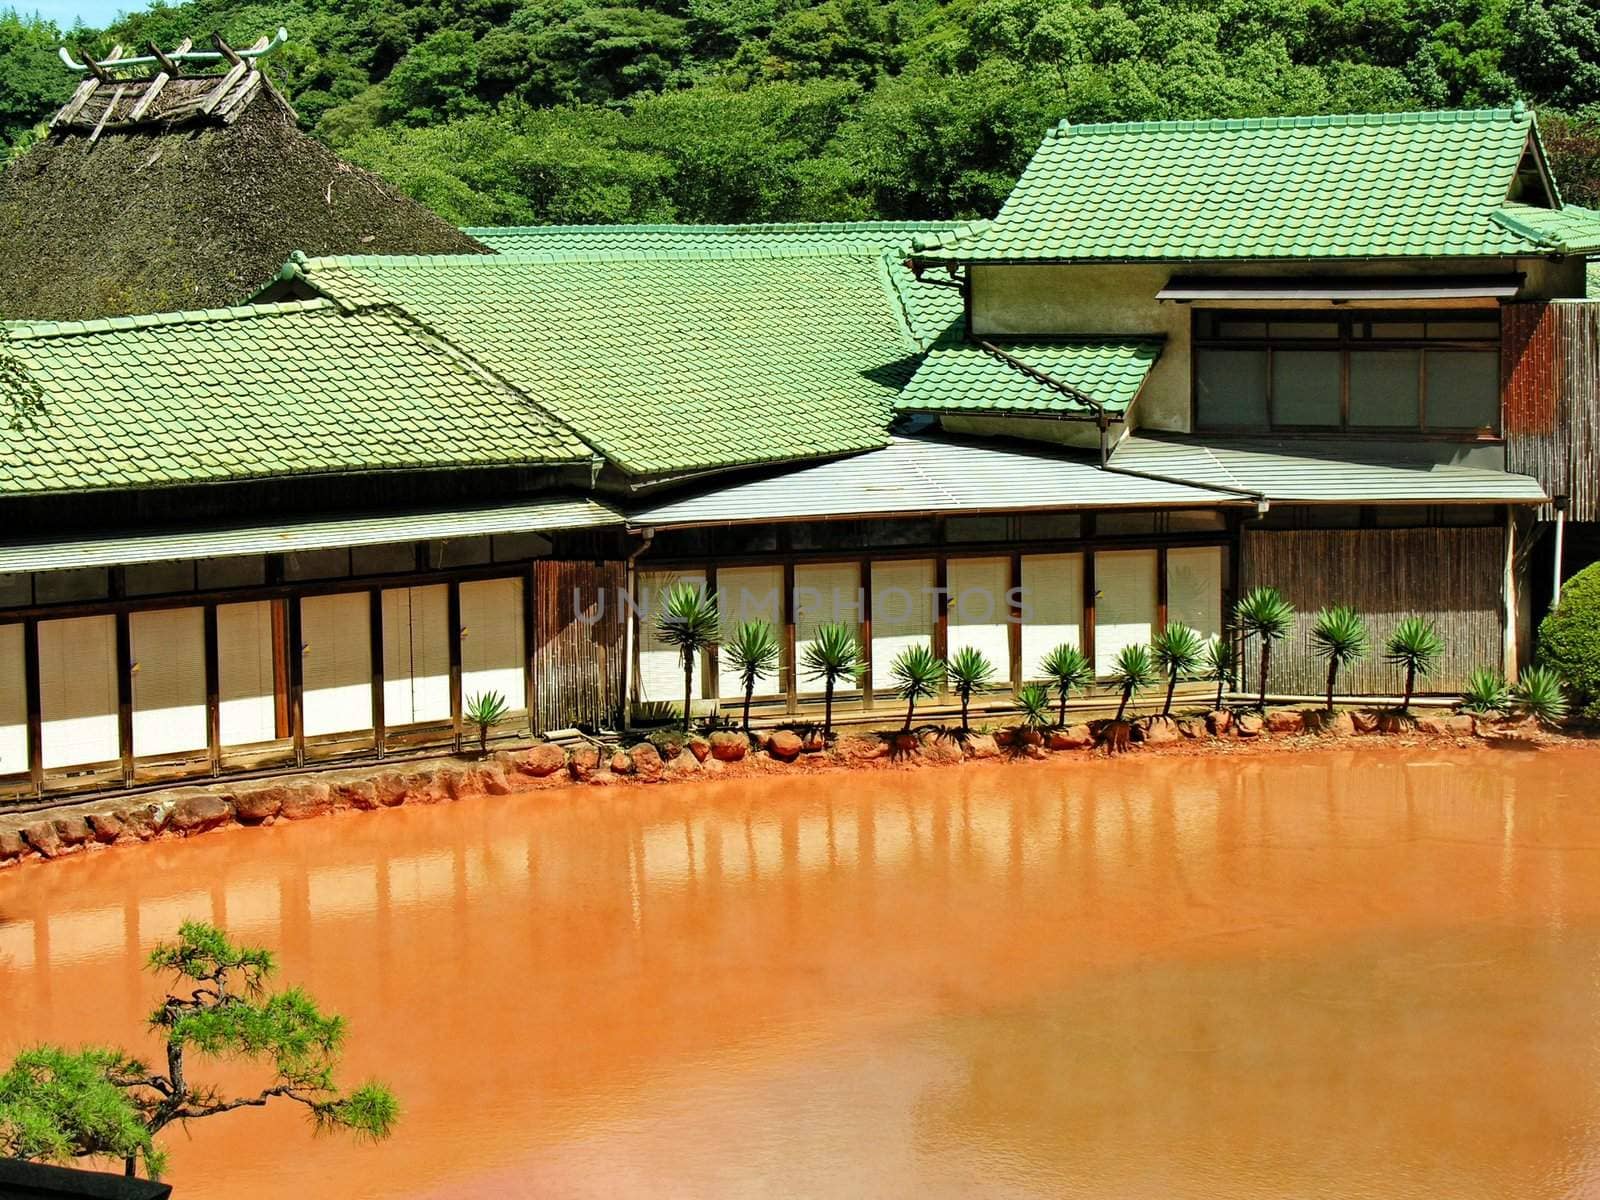 Thremal hot pond in Japan, the hells hot spring, Beppu